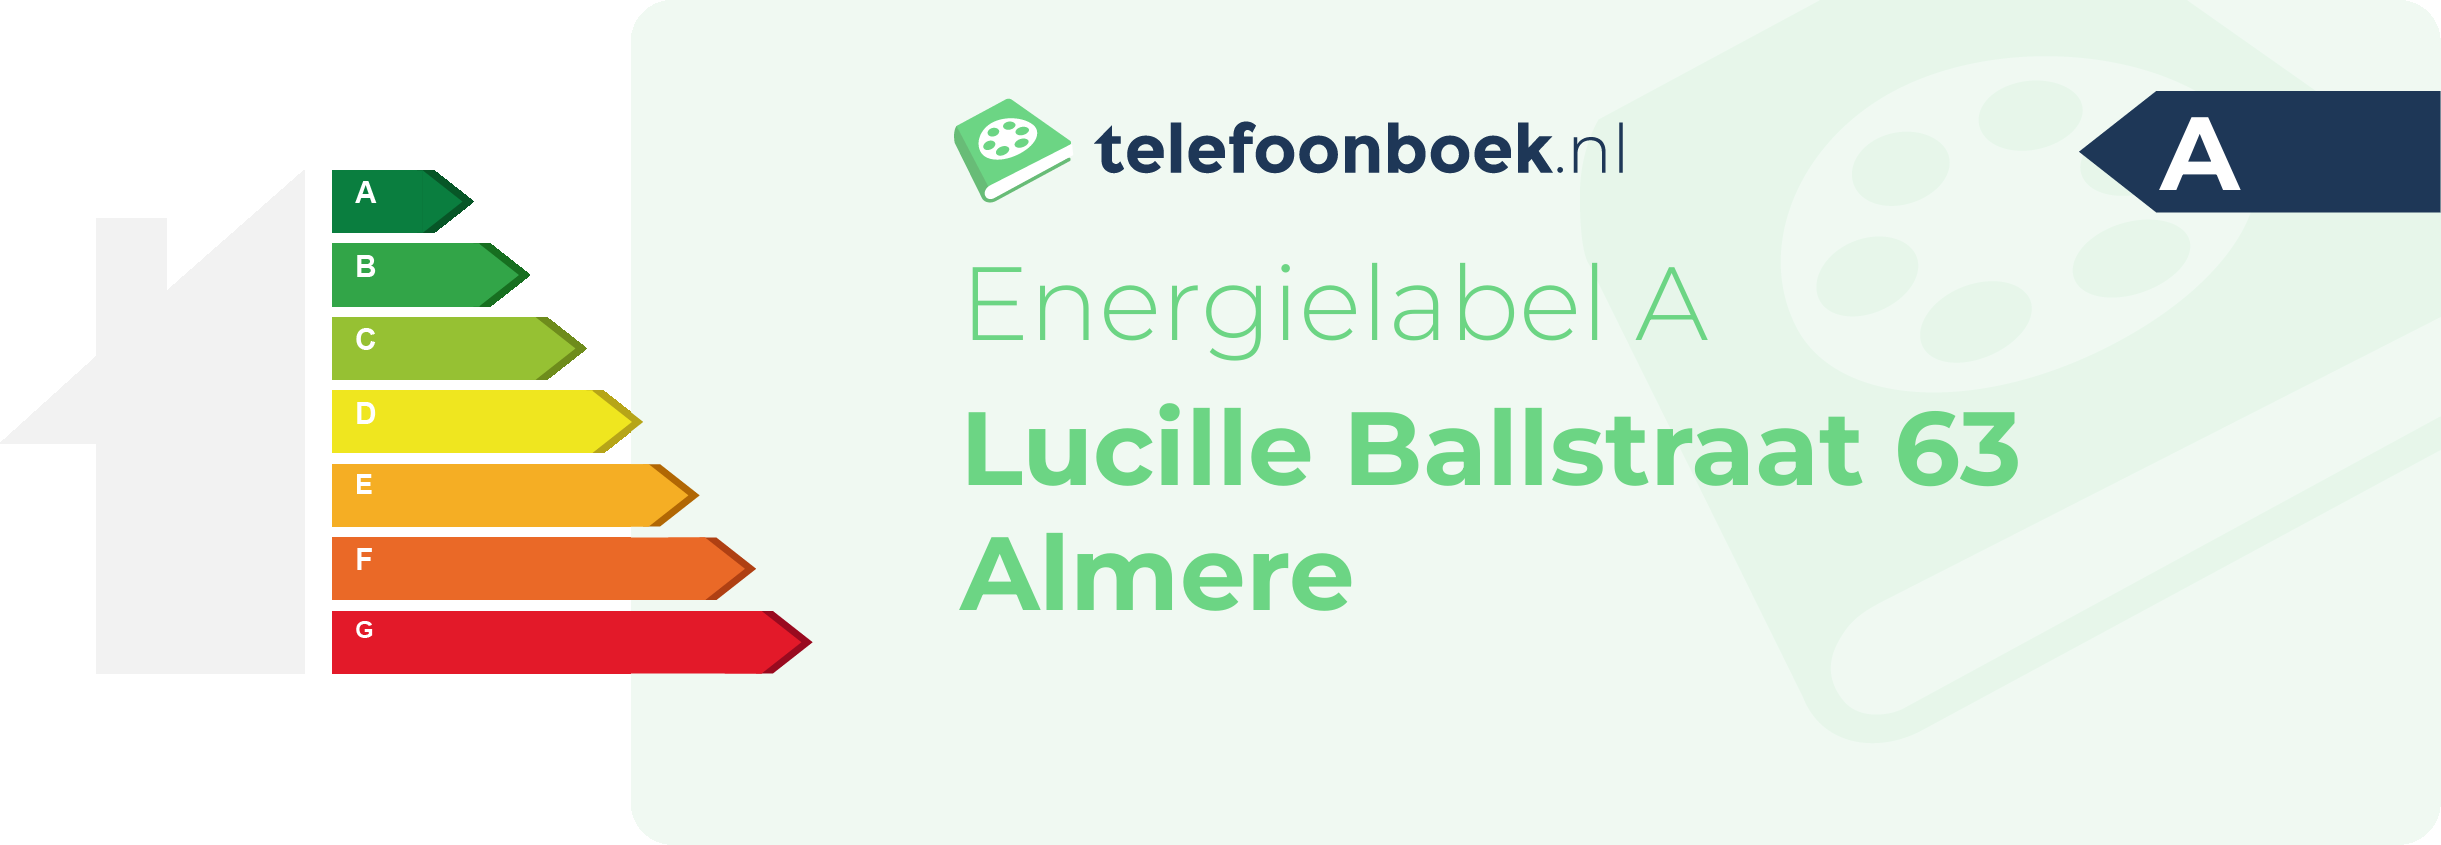 Energielabel Lucille Ballstraat 63 Almere